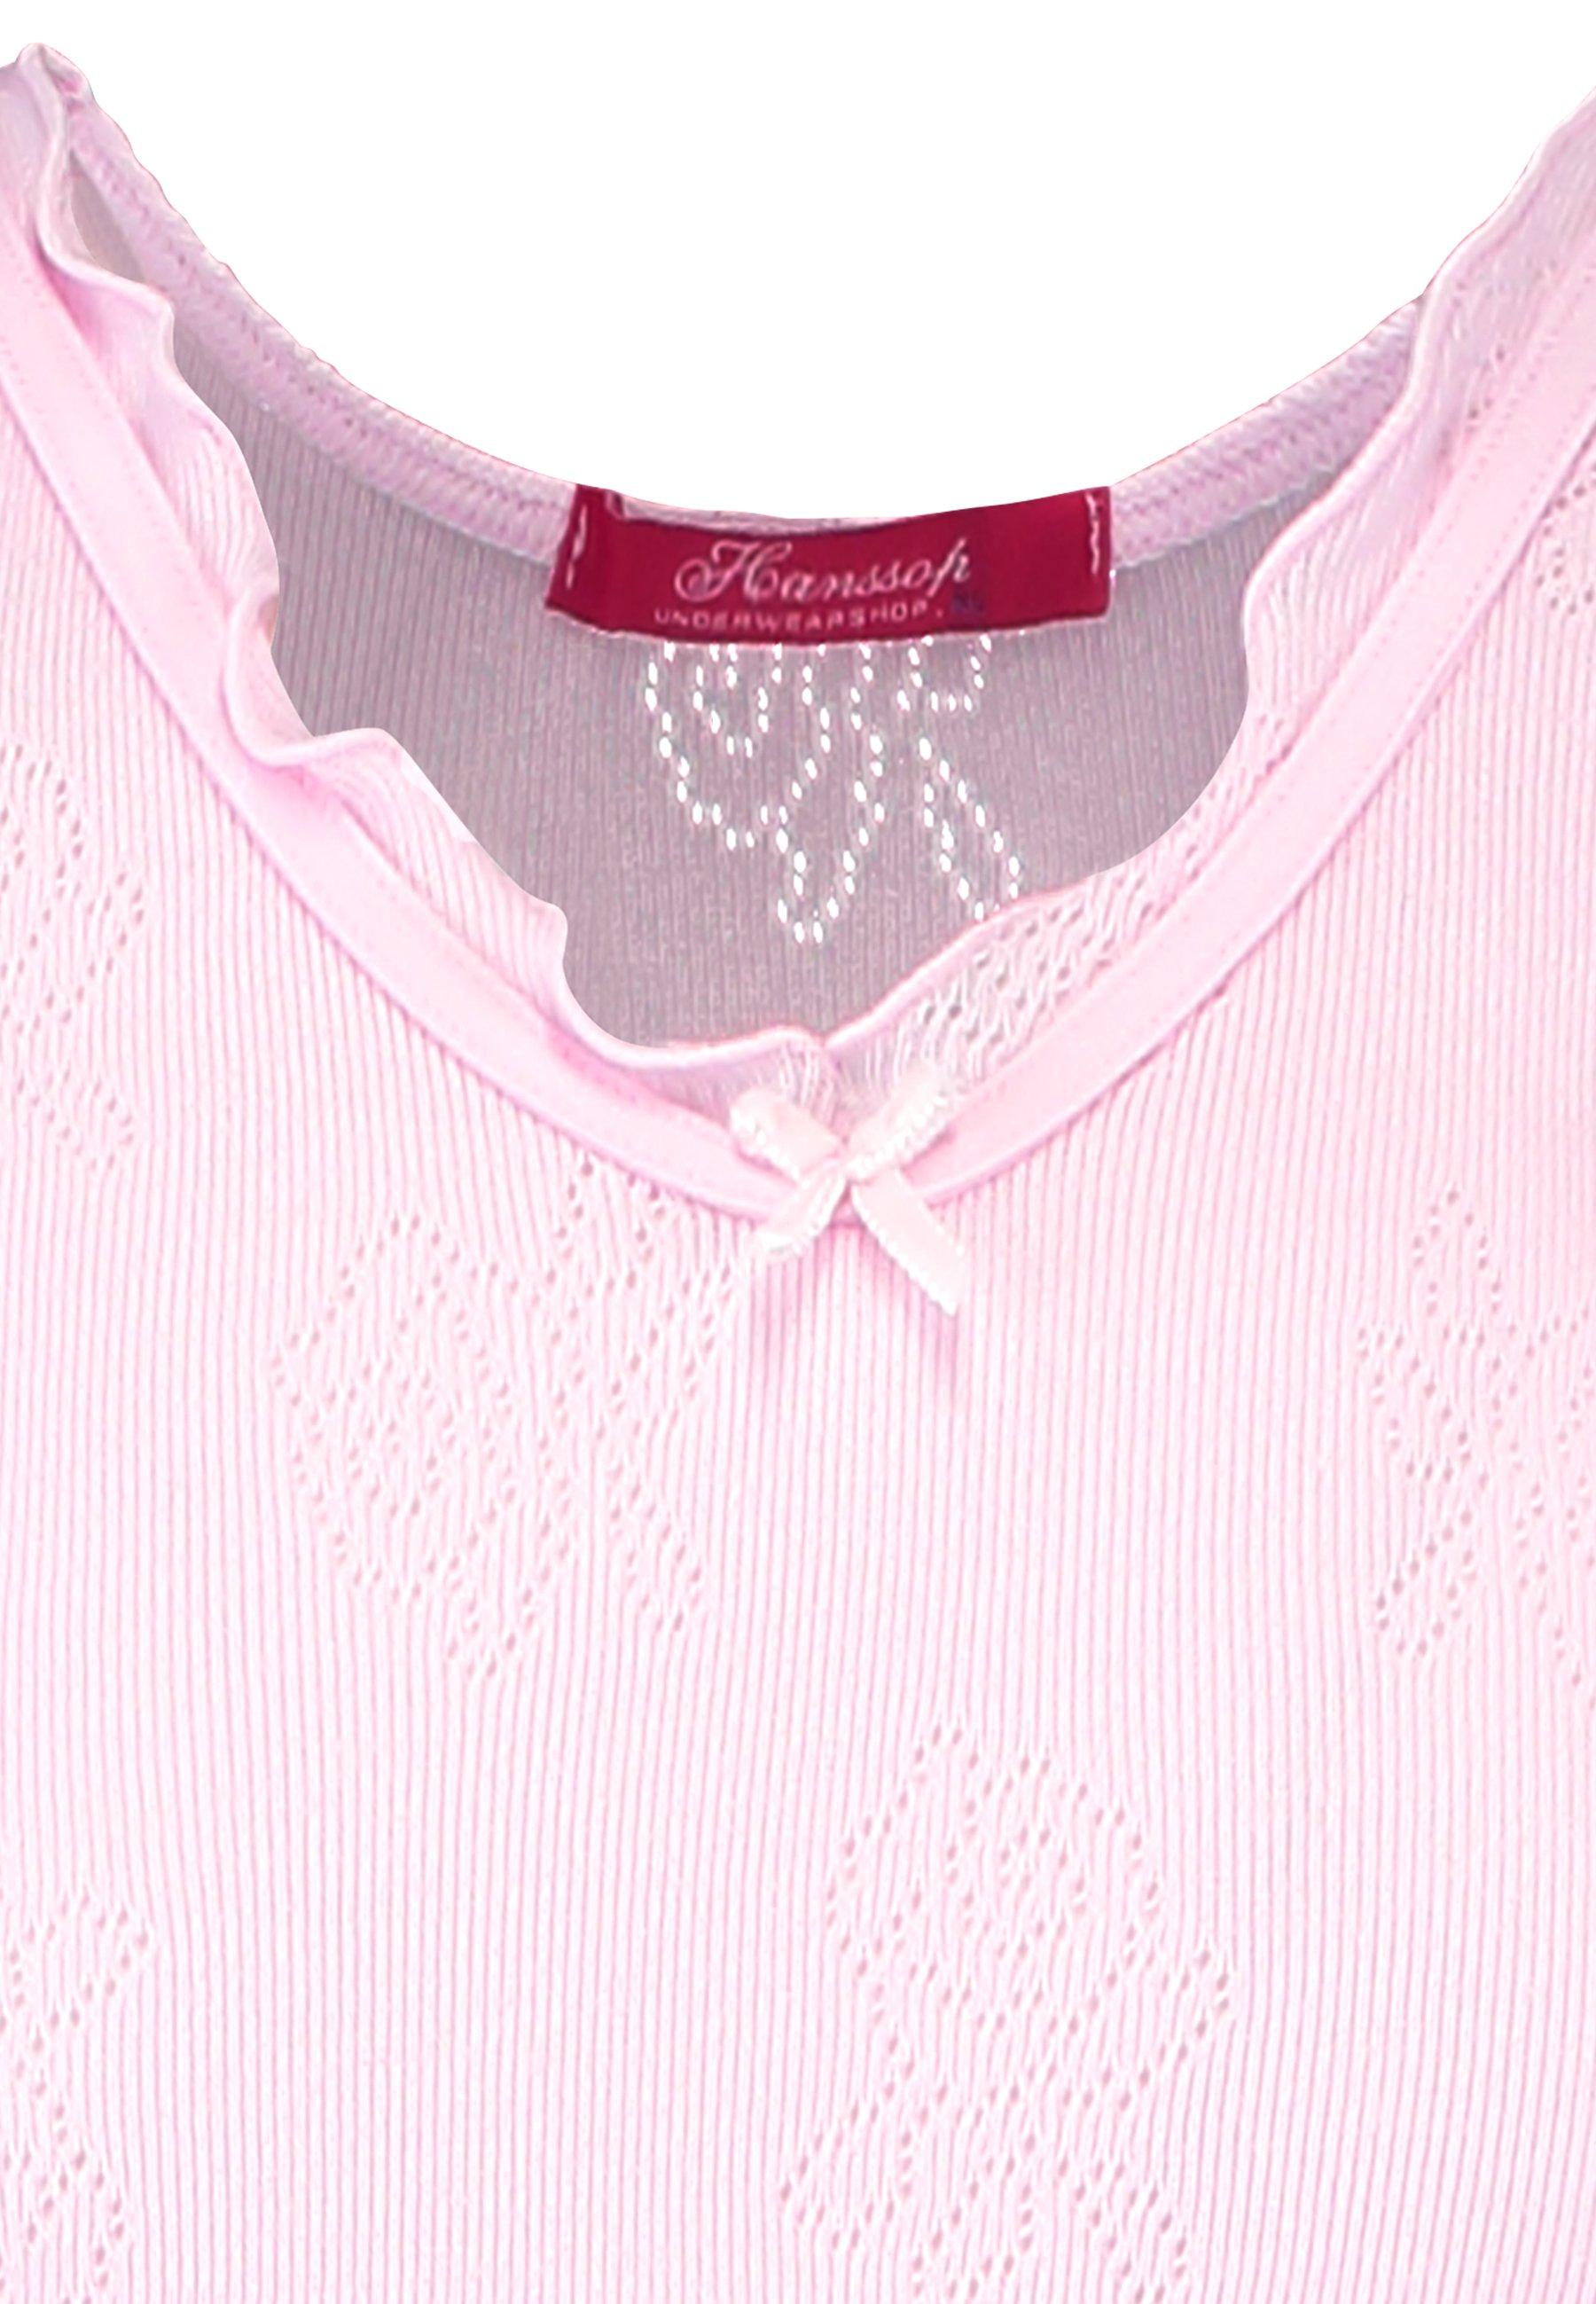 Hanssop  Unterhemd Basic, Pointelle Rose 